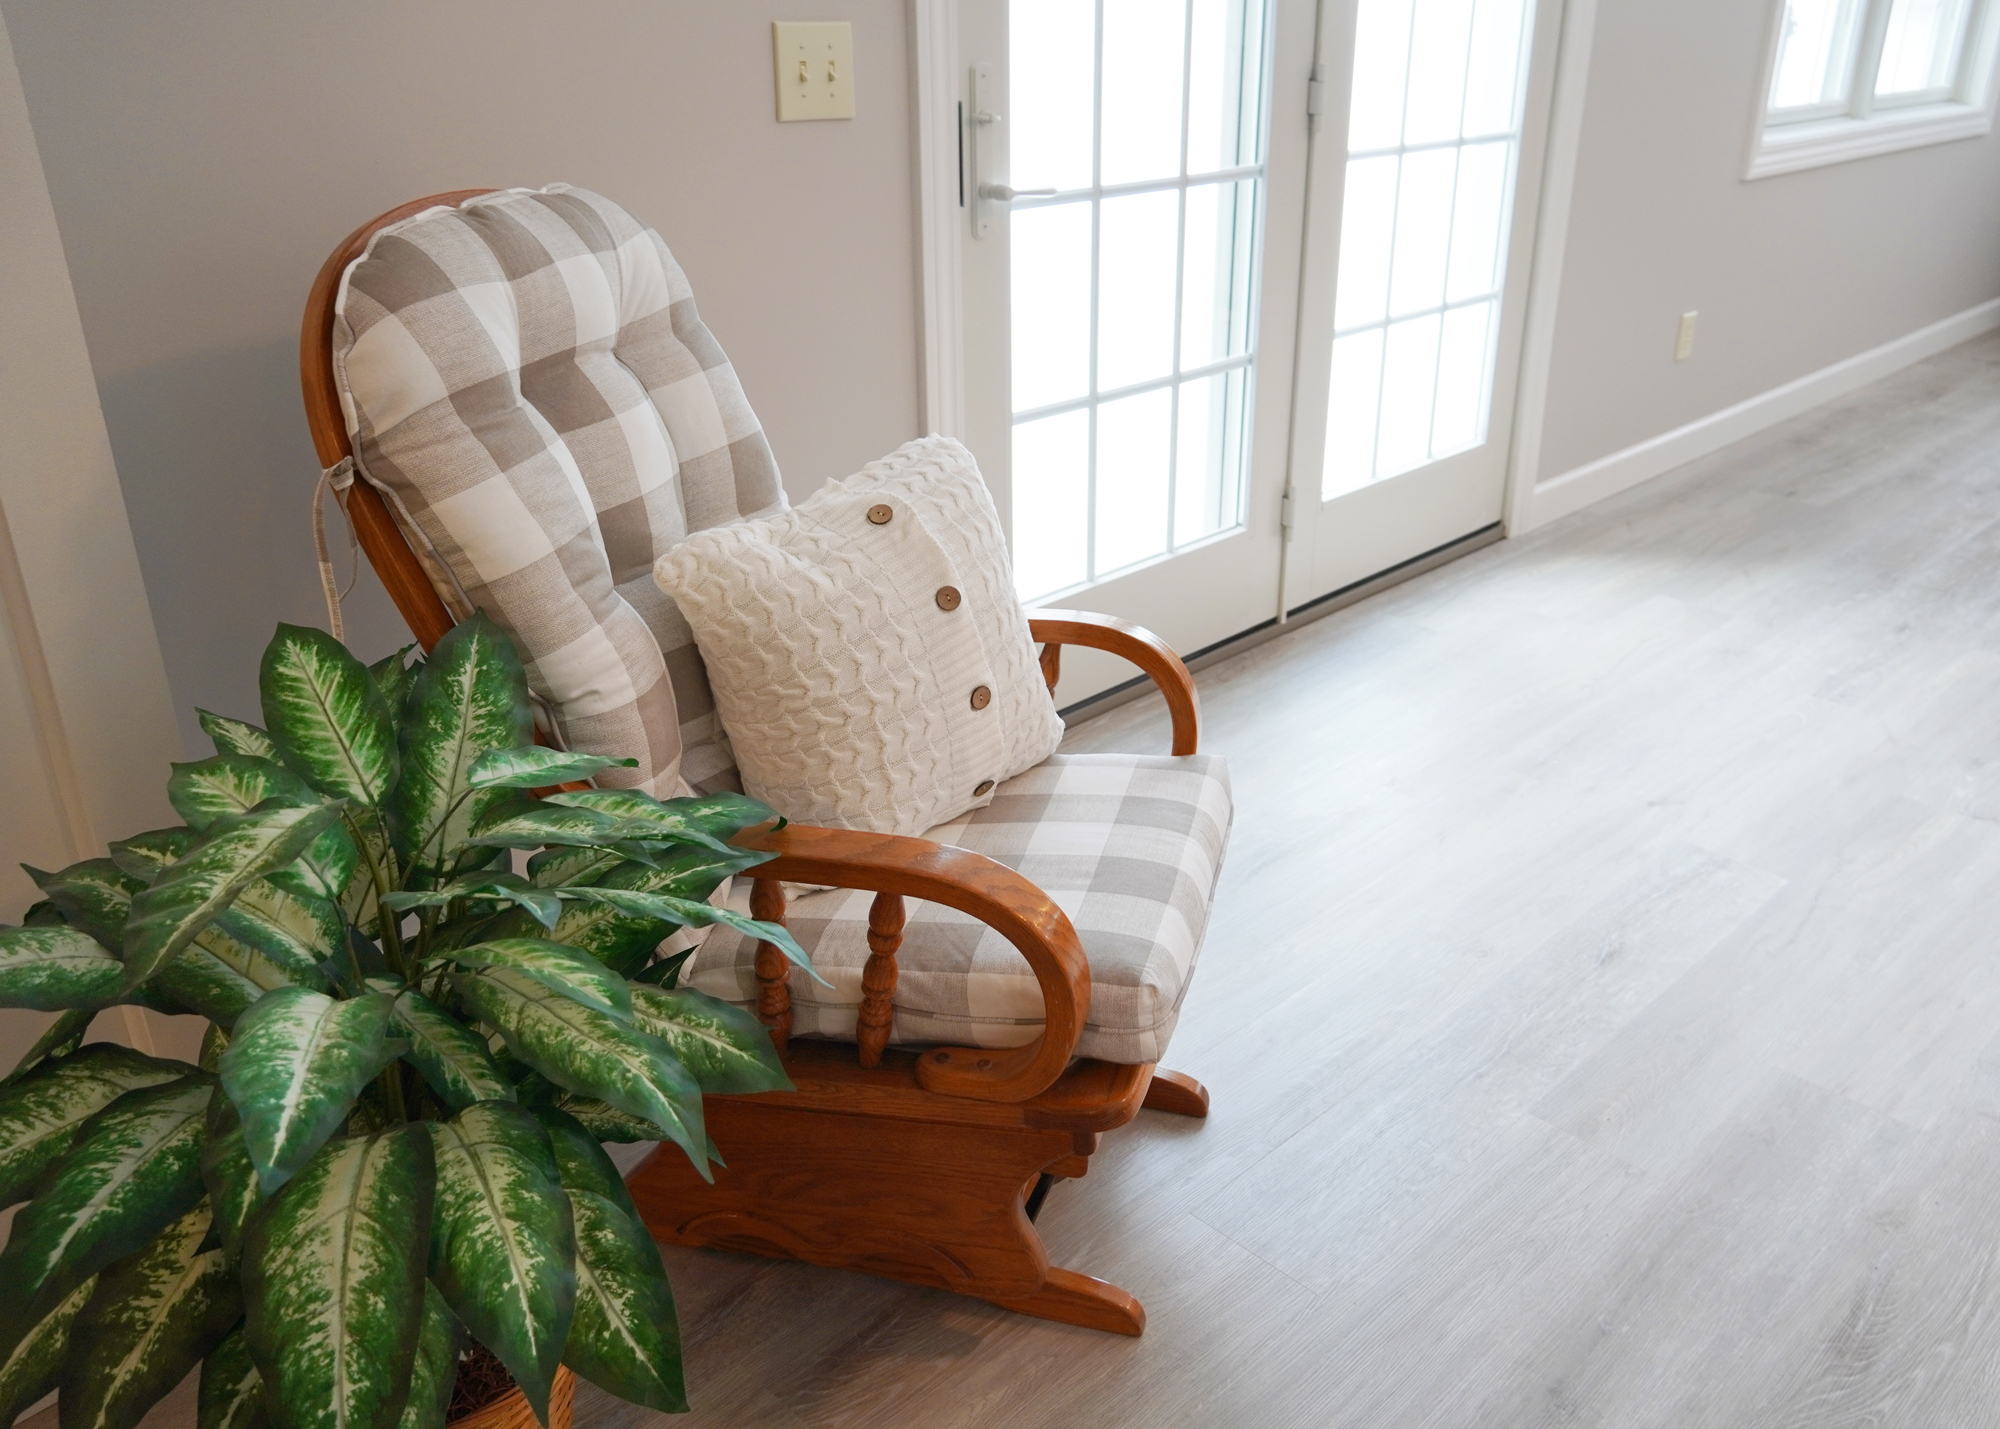 Rocker chair and plant on vinyl plank flooring